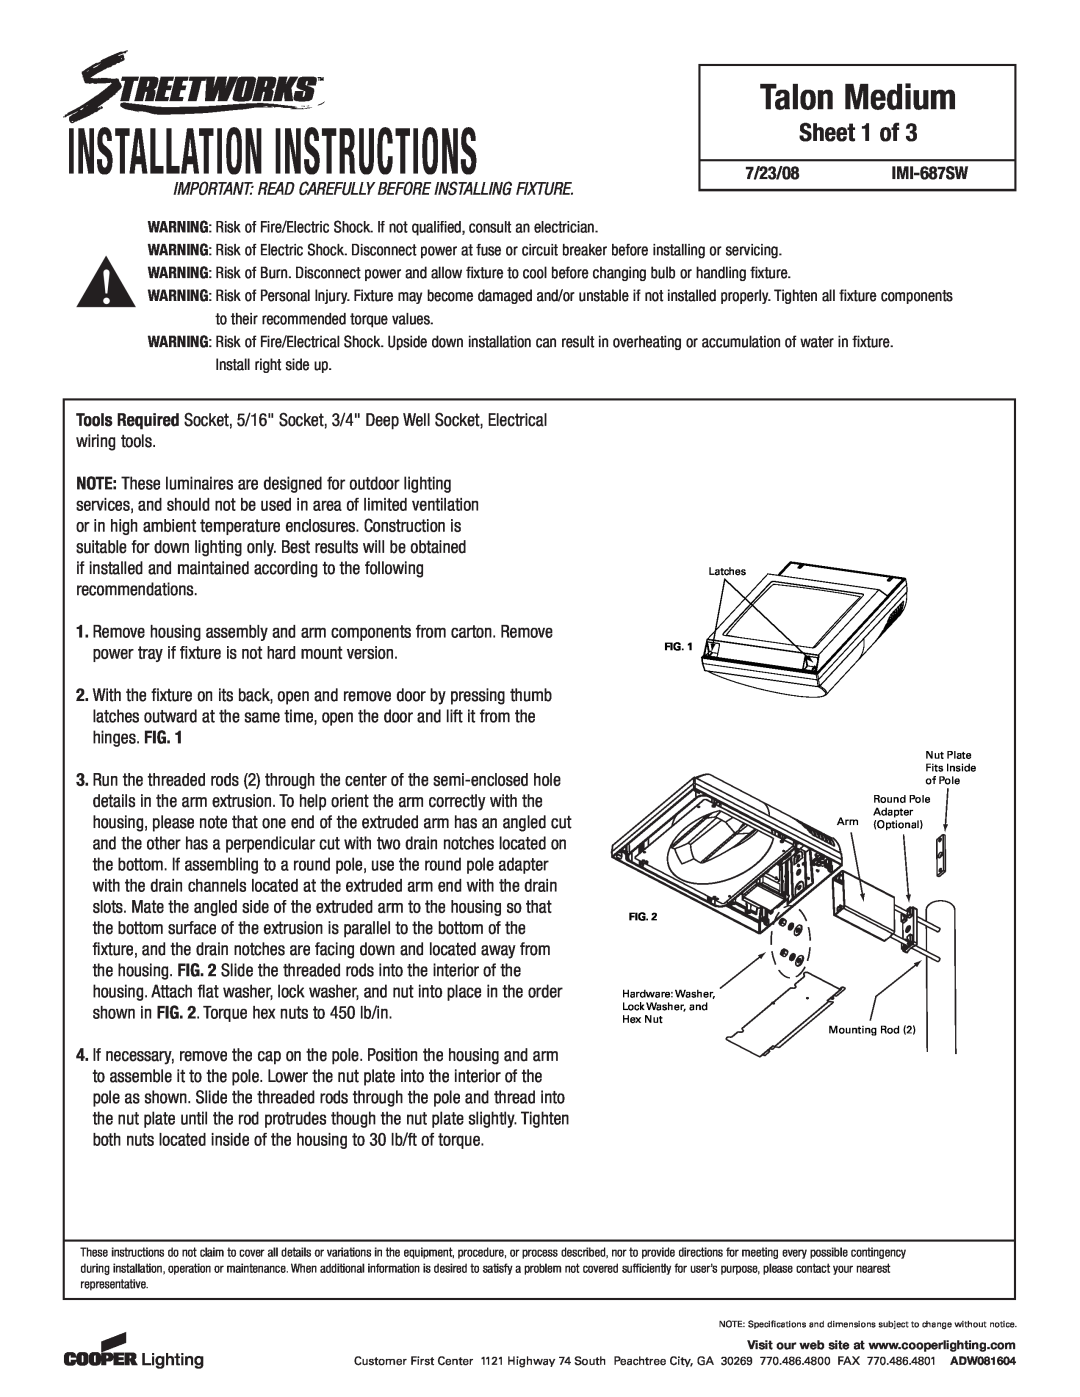 Cooper Lighting TMU/TLU installation instructions Installation Instructions, Talon Medium, Sheet 1 of 